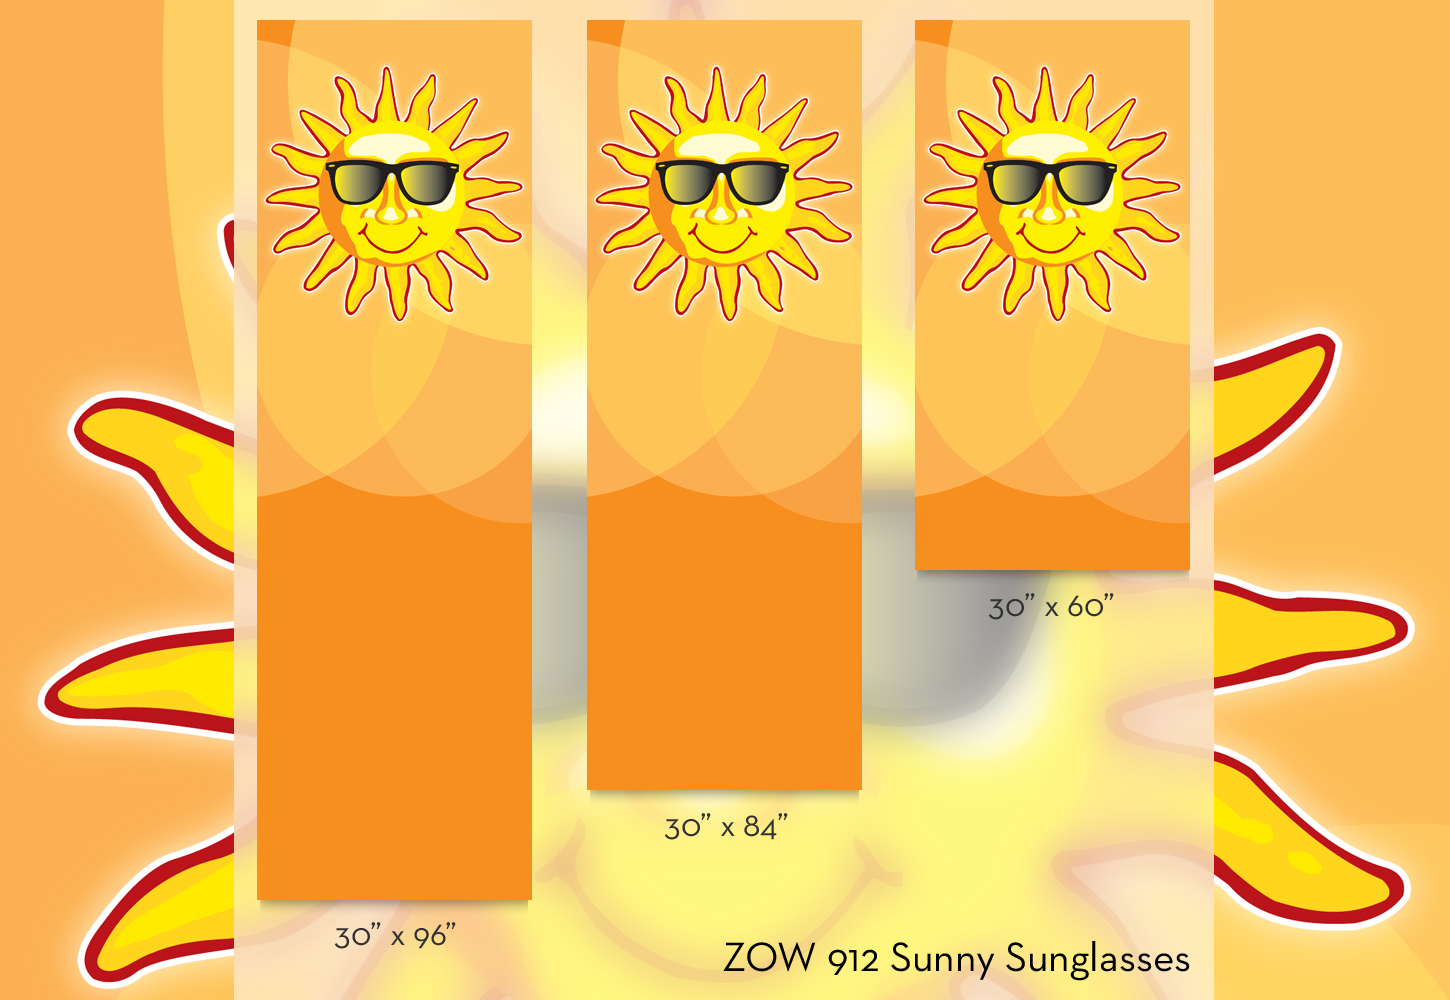 ZOW 912 Sunny Sunglasses